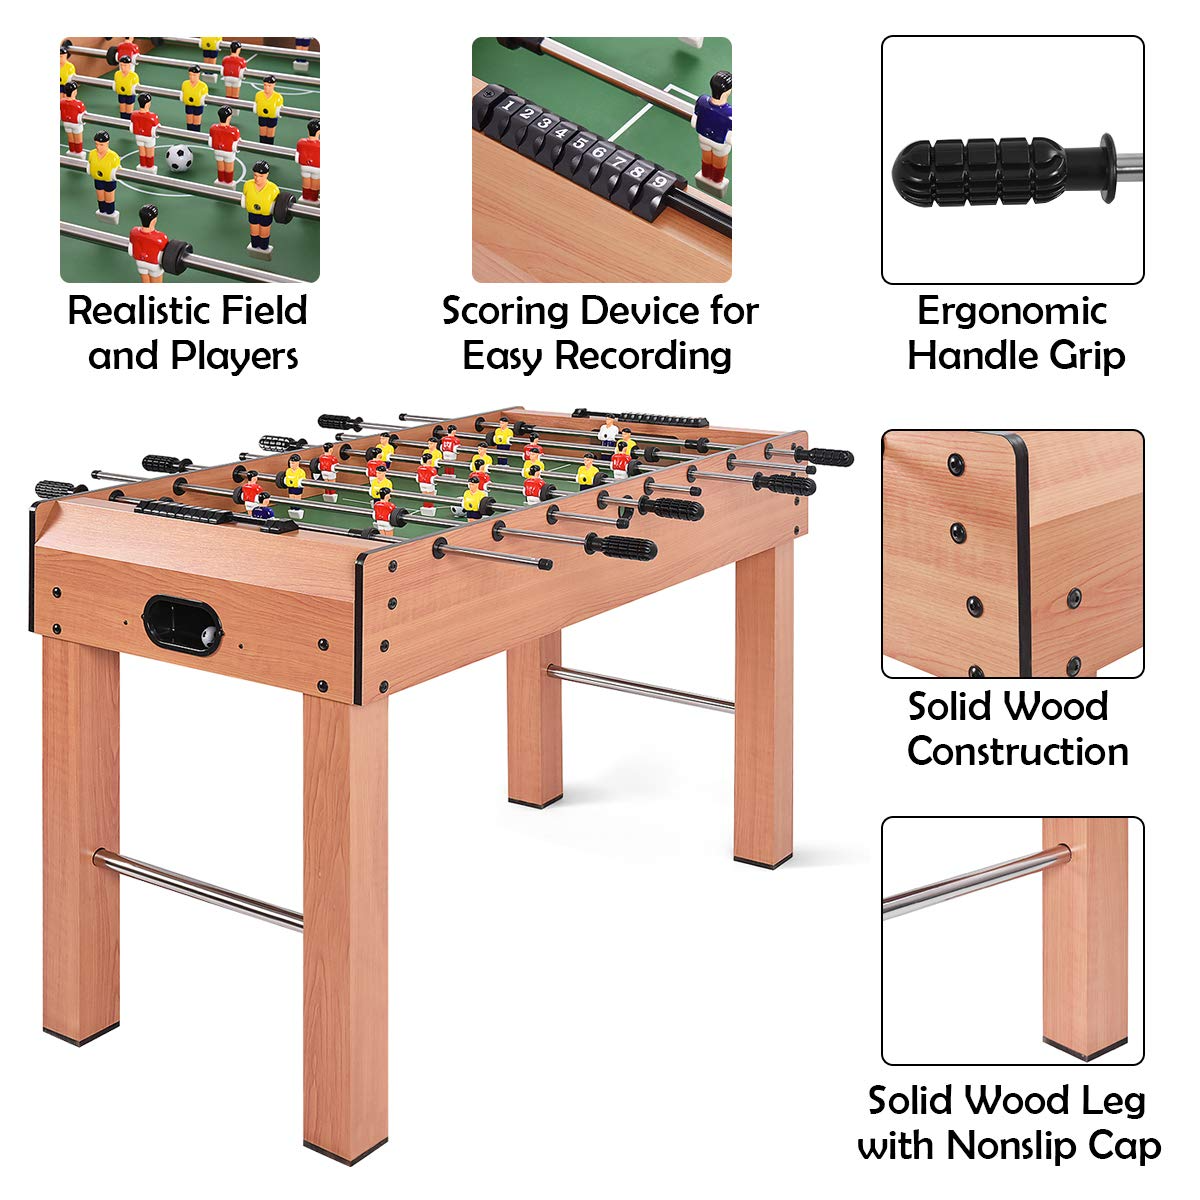 Giantex 48'' Wooden Soccer Table Game w/ Footballs